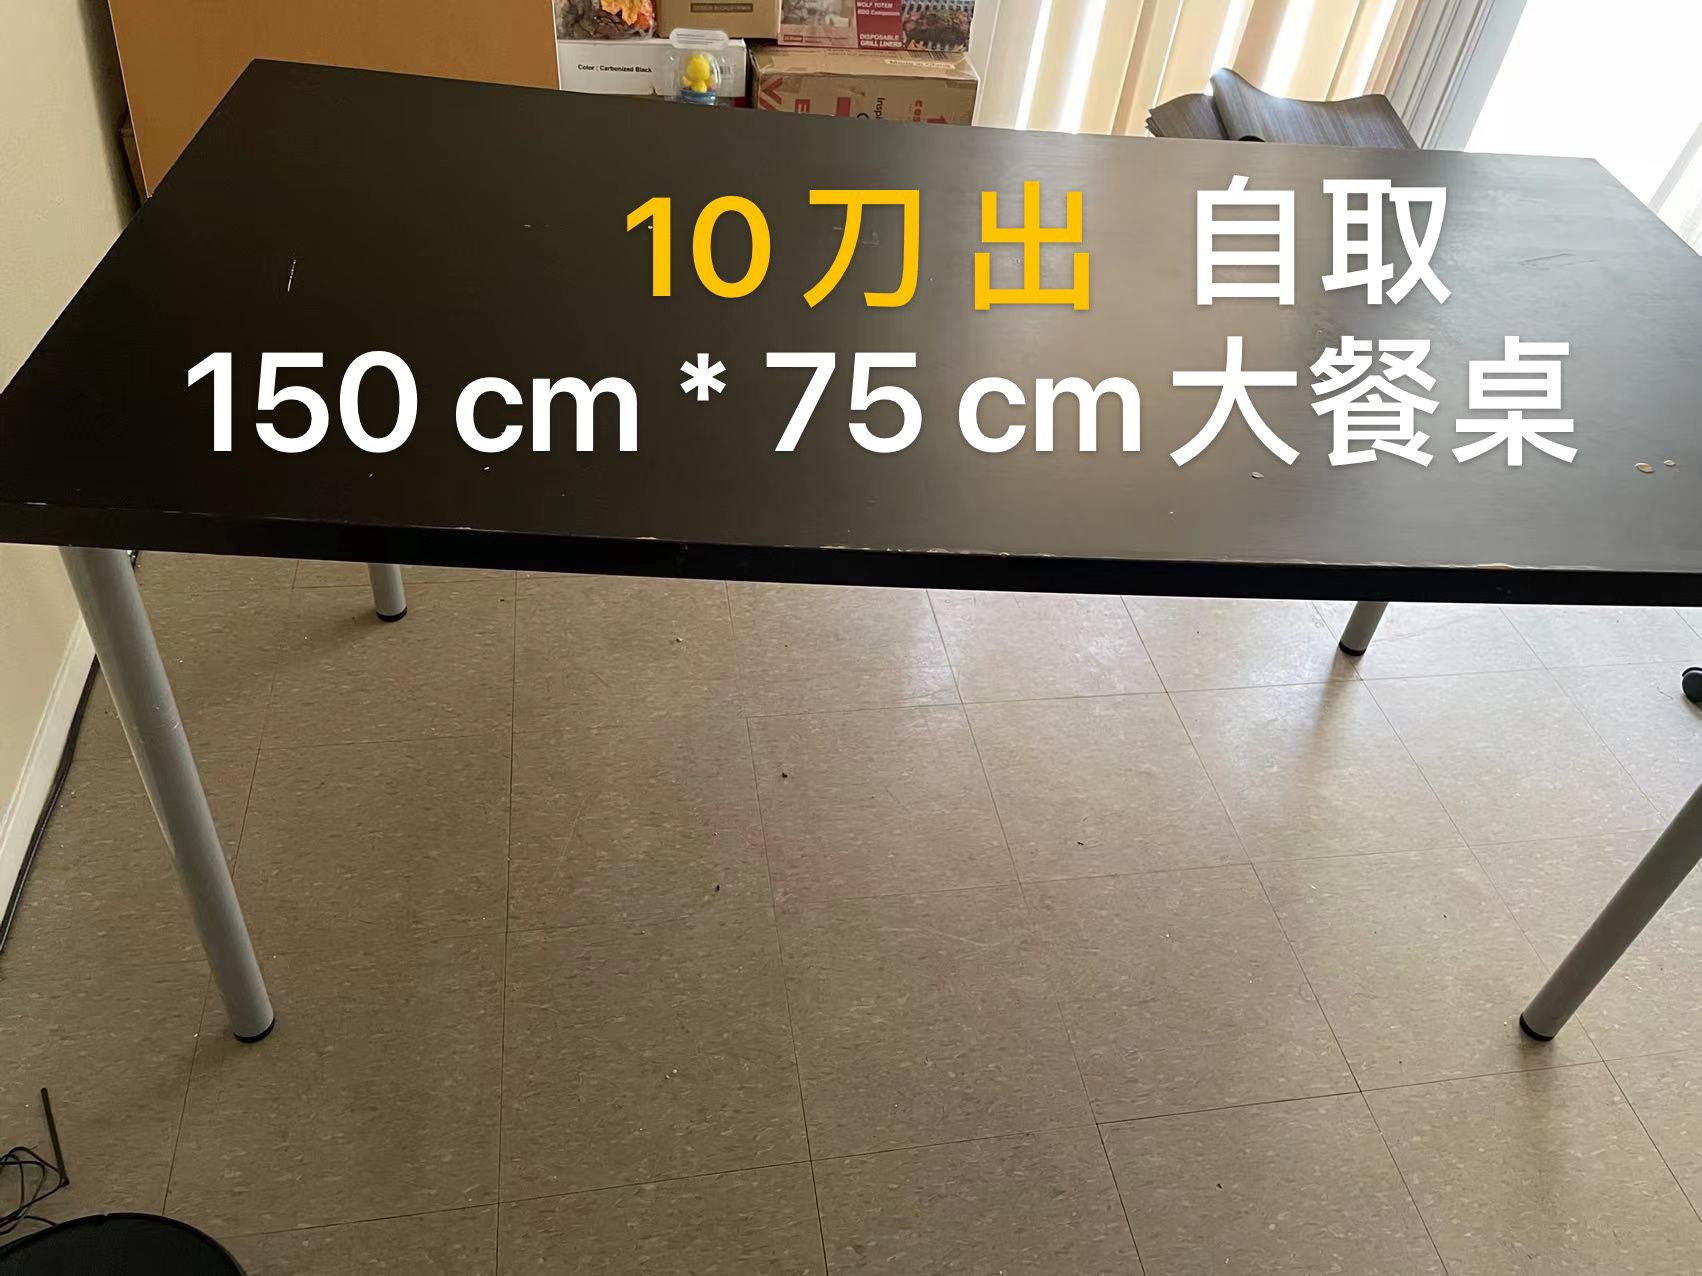 150 cm X 75 cm dinning table